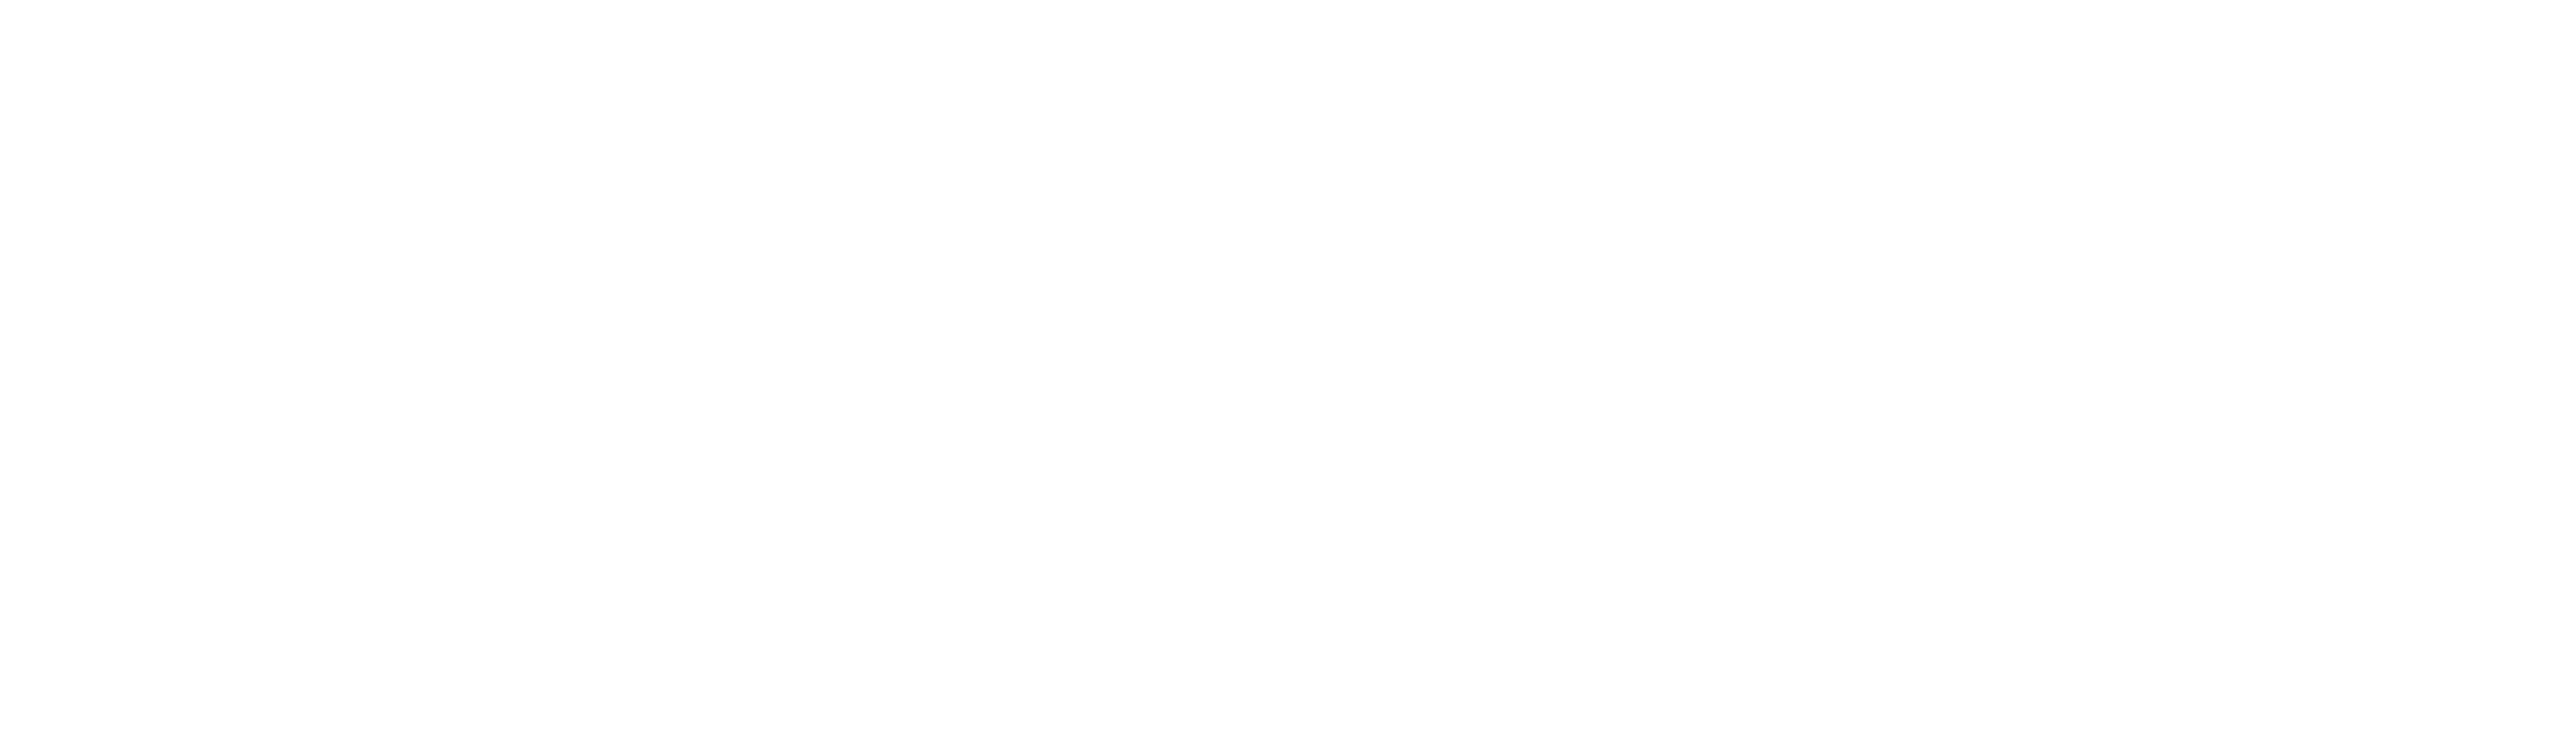 Dr. Romantic logo